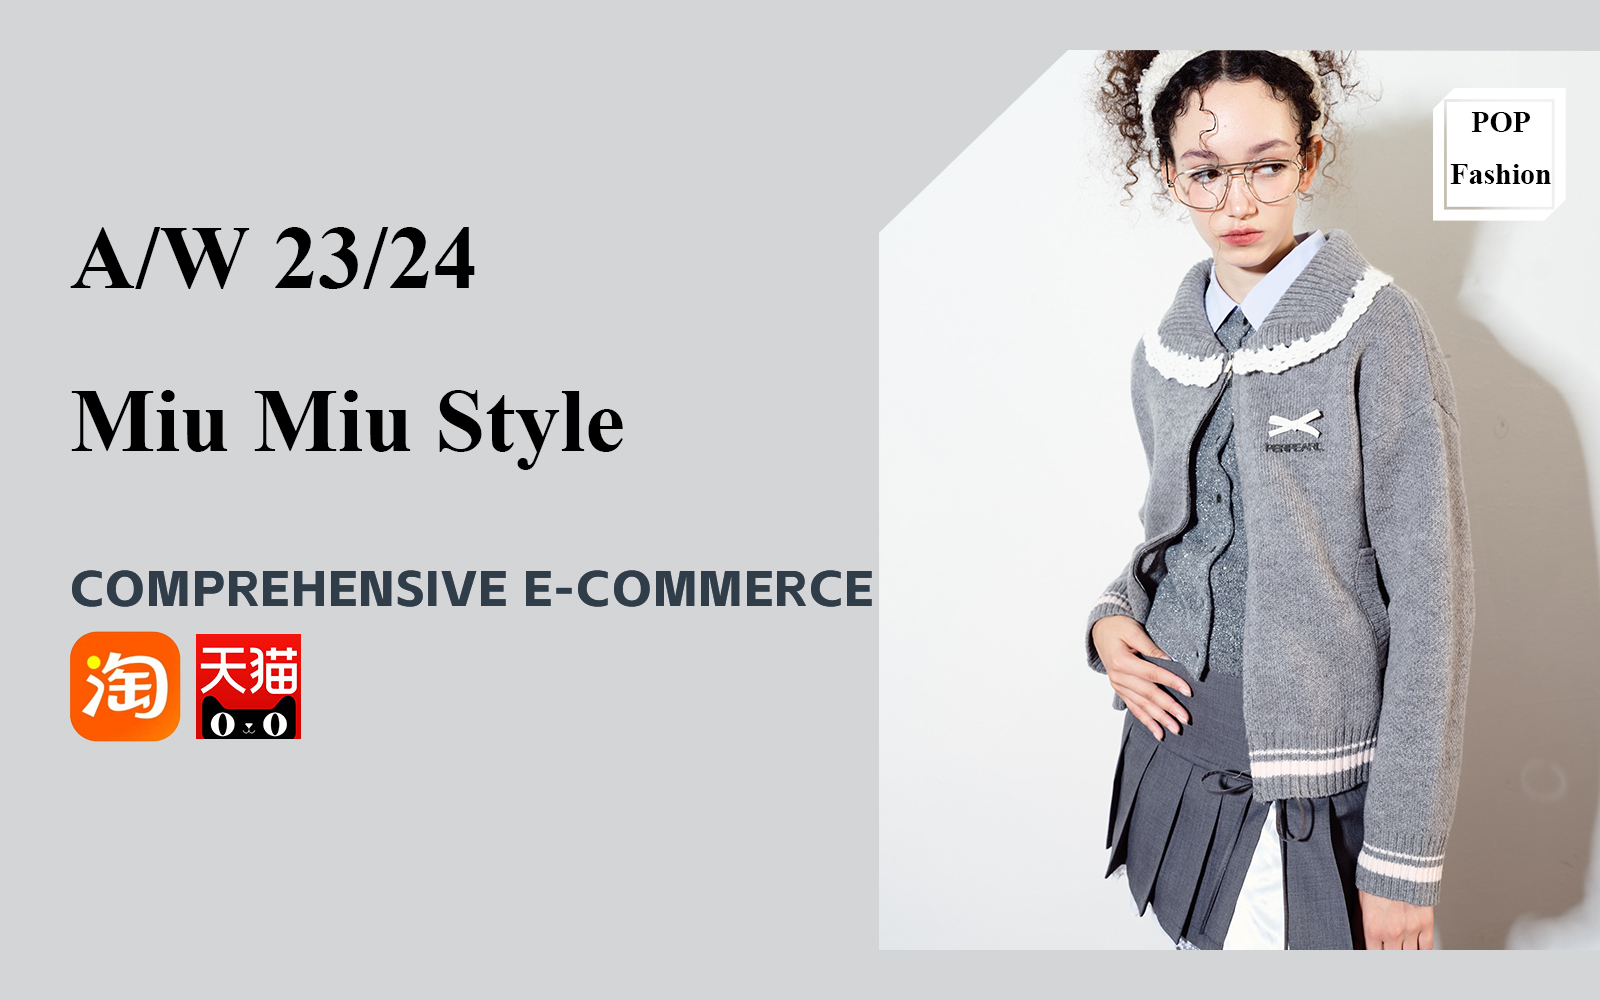 Miu Miu Style -- The Popular Style of E-Commerce Womenswear Brand